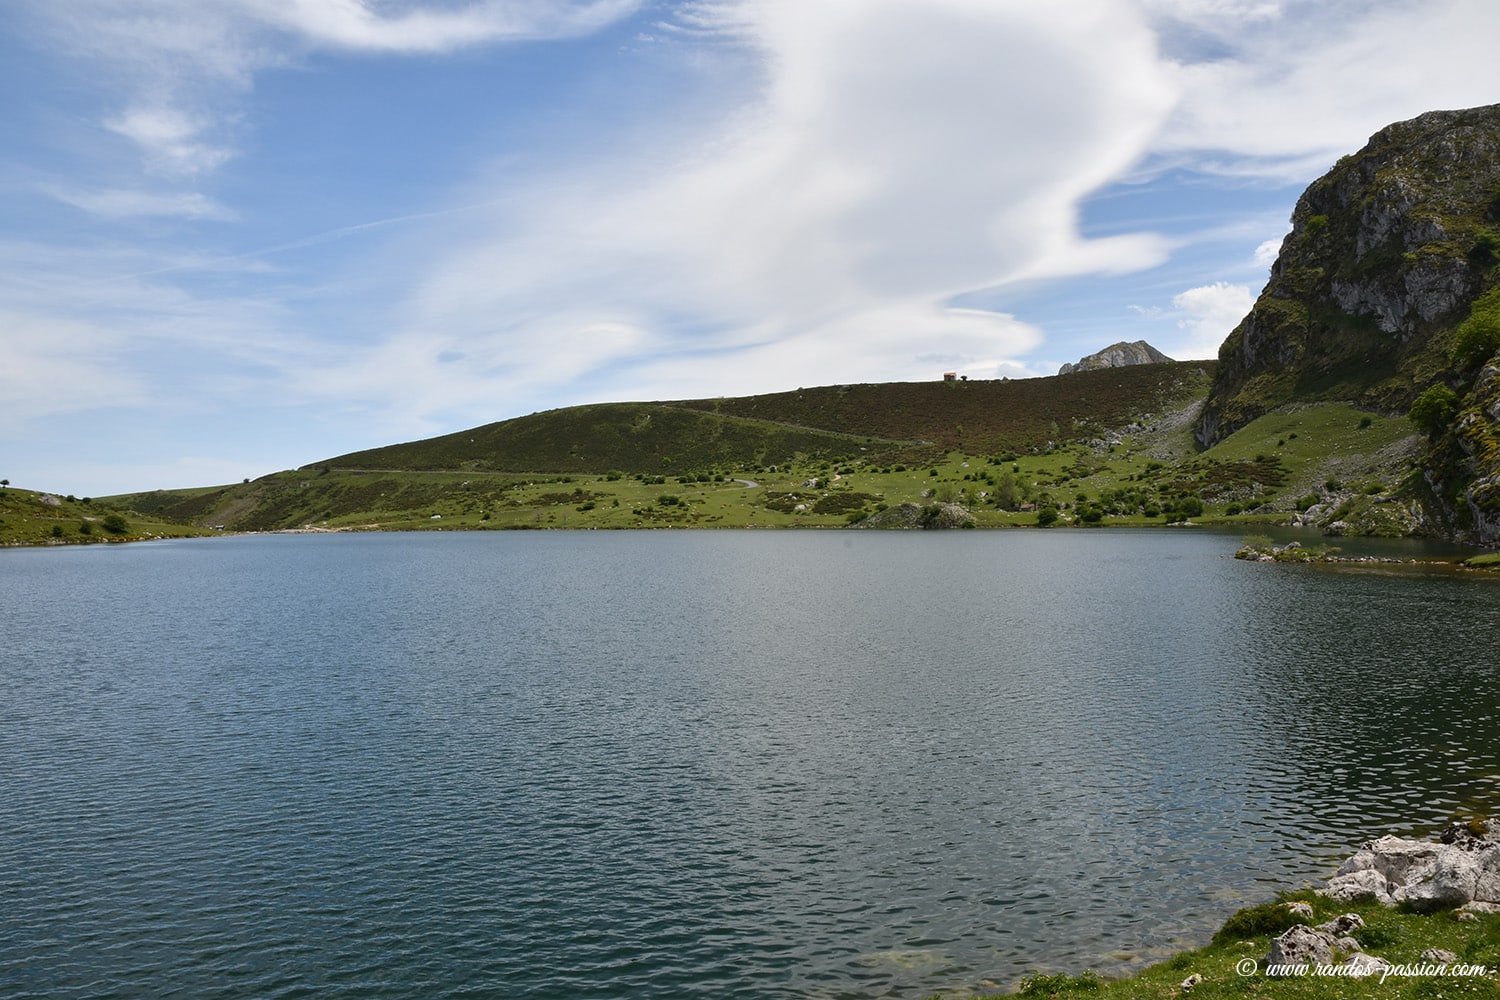 Lacs de Covadonga - Le lac Enol